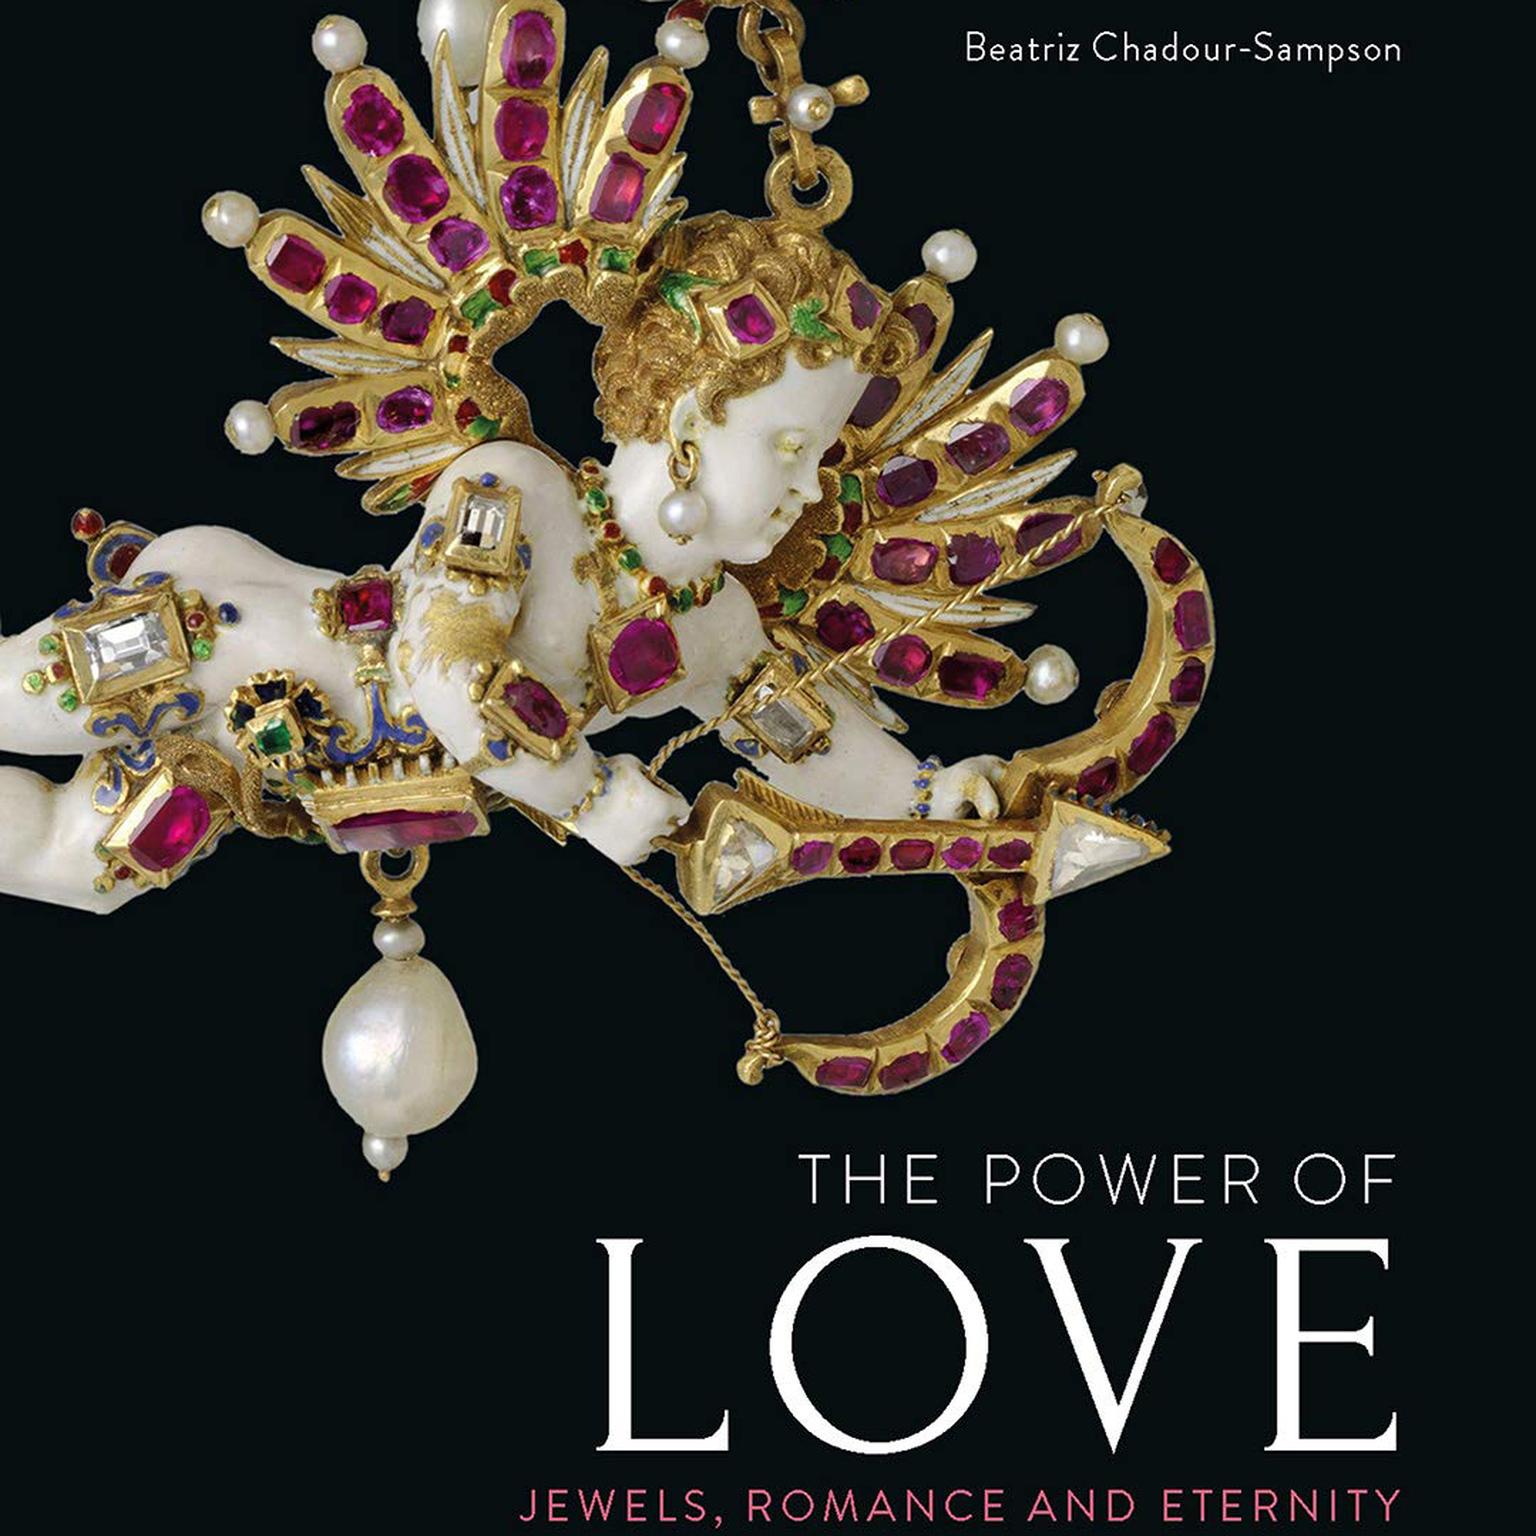 The power of Love by Baetriz Chadour-Sampson